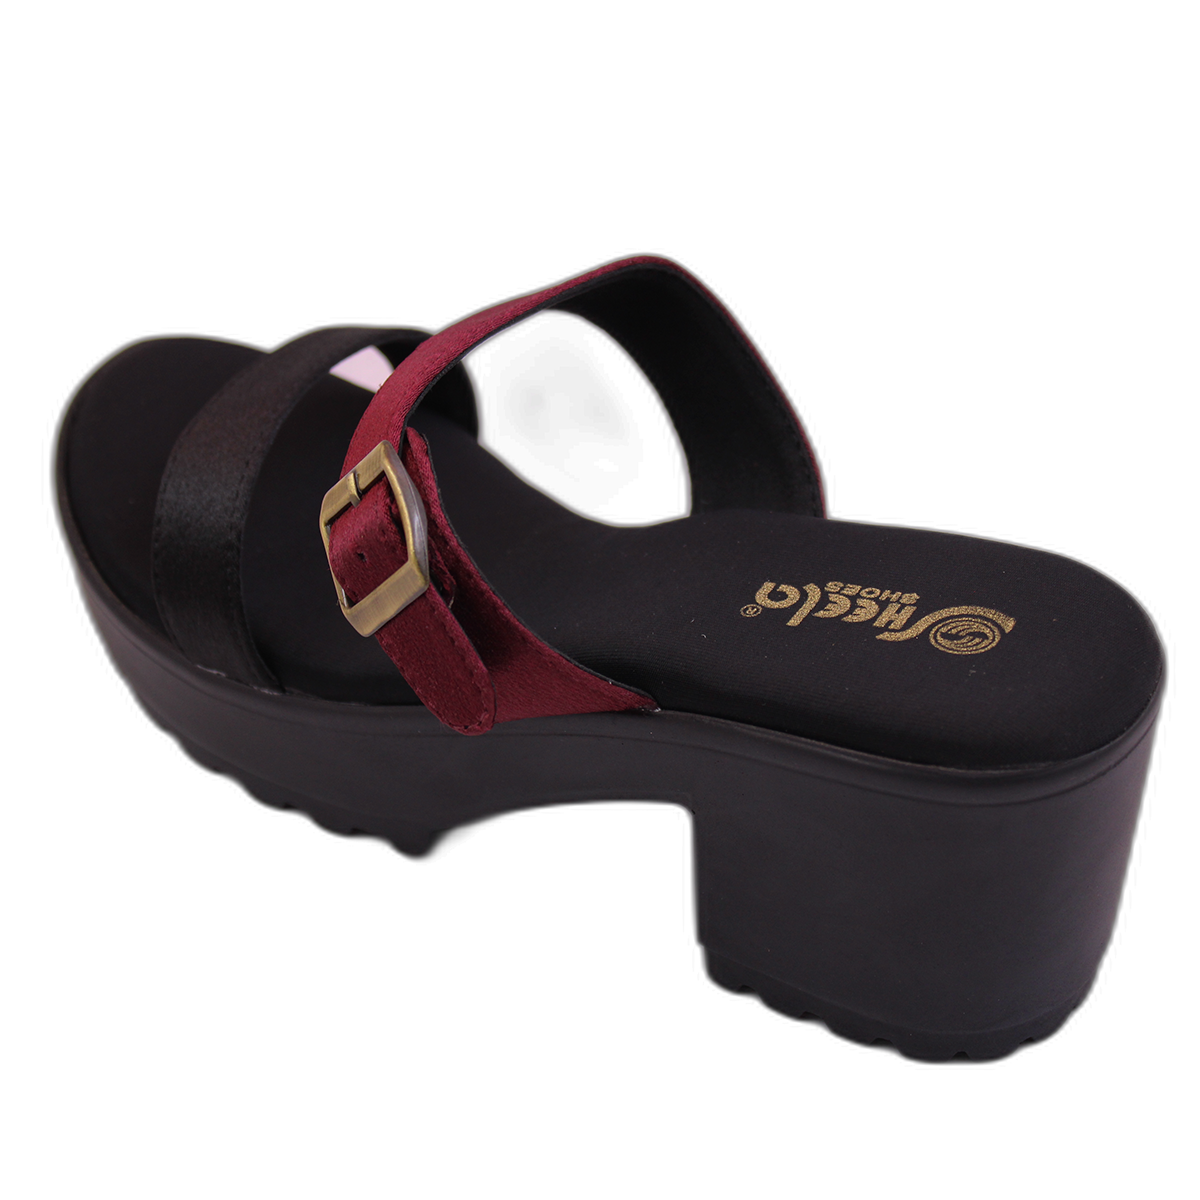 29% OFF on Sindhi Footwear Golden Sequence High Heel Sandal on Snapdeal |  PaisaWapas.com